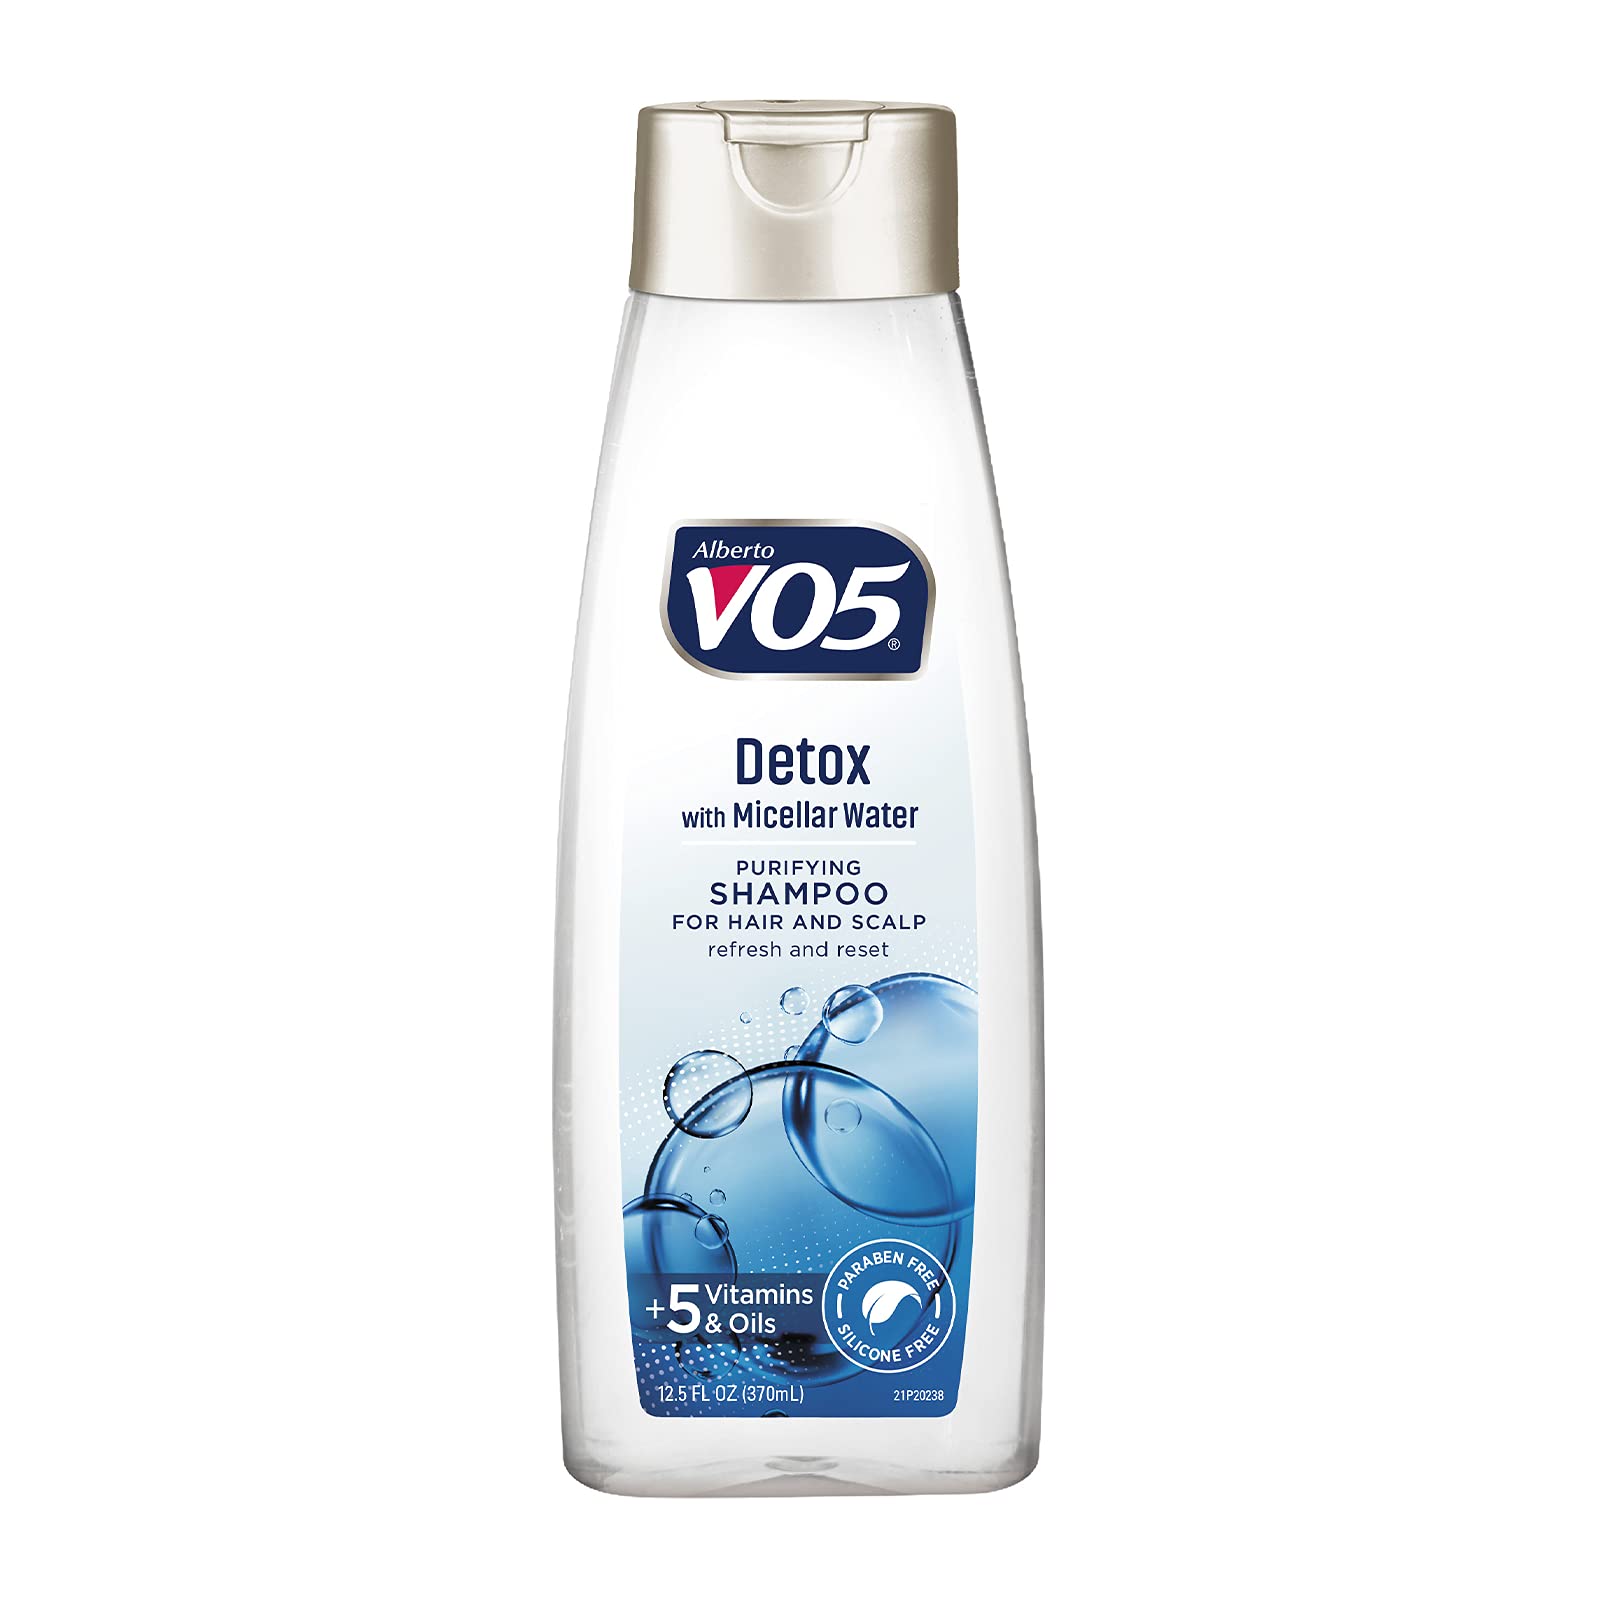 Alberto VO5 Detox with Micellar Water Purifying Shampoo